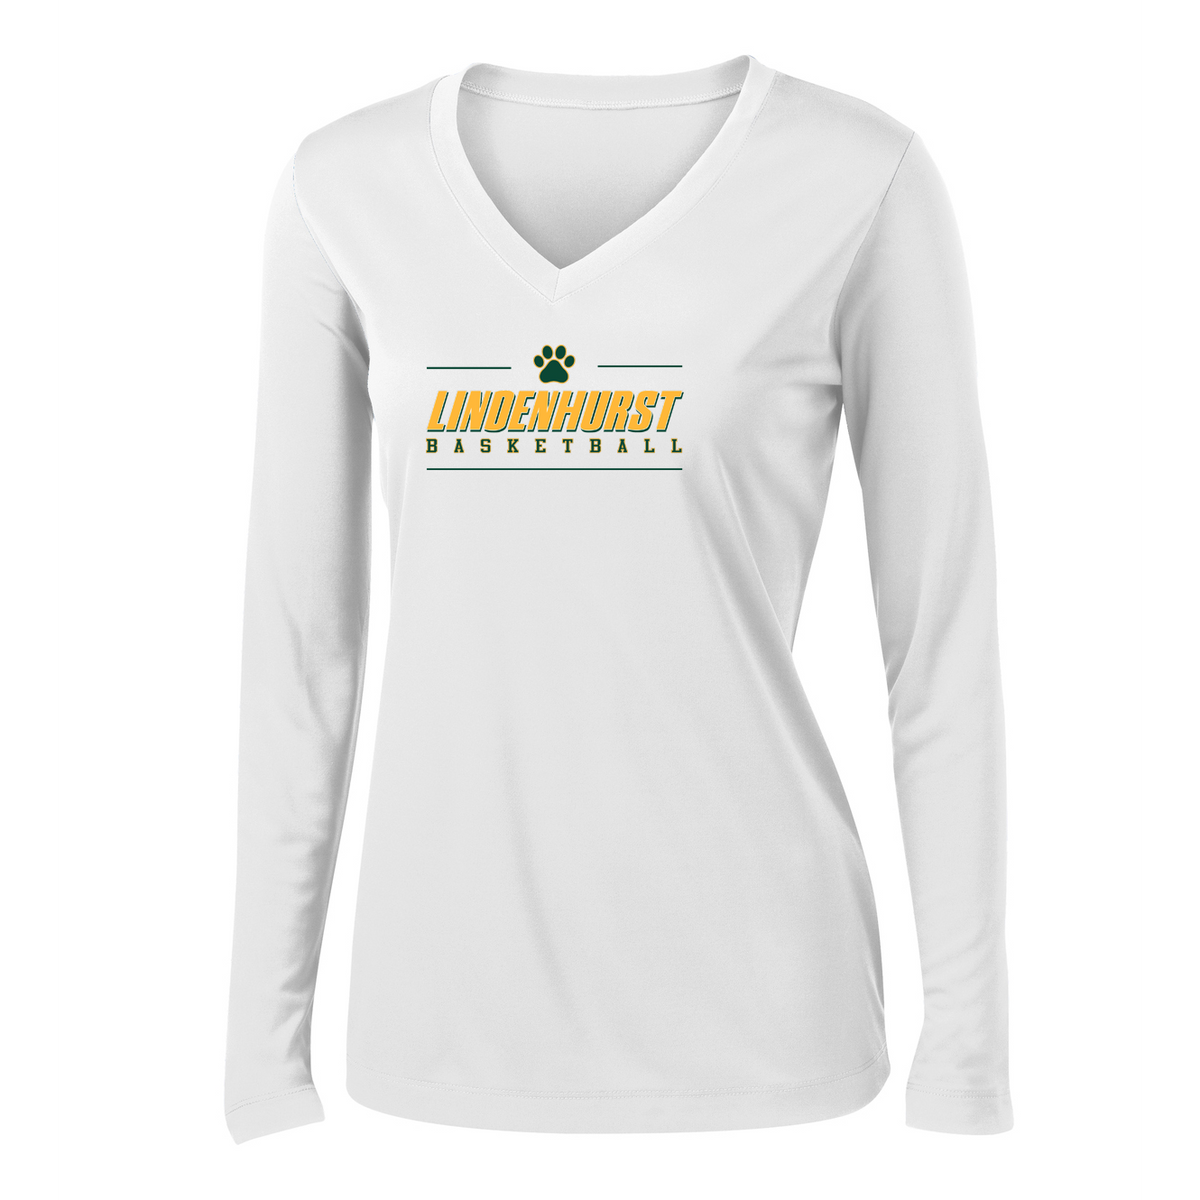 Lindenhurst Basketball Women's Long Sleeve Performance Shirt